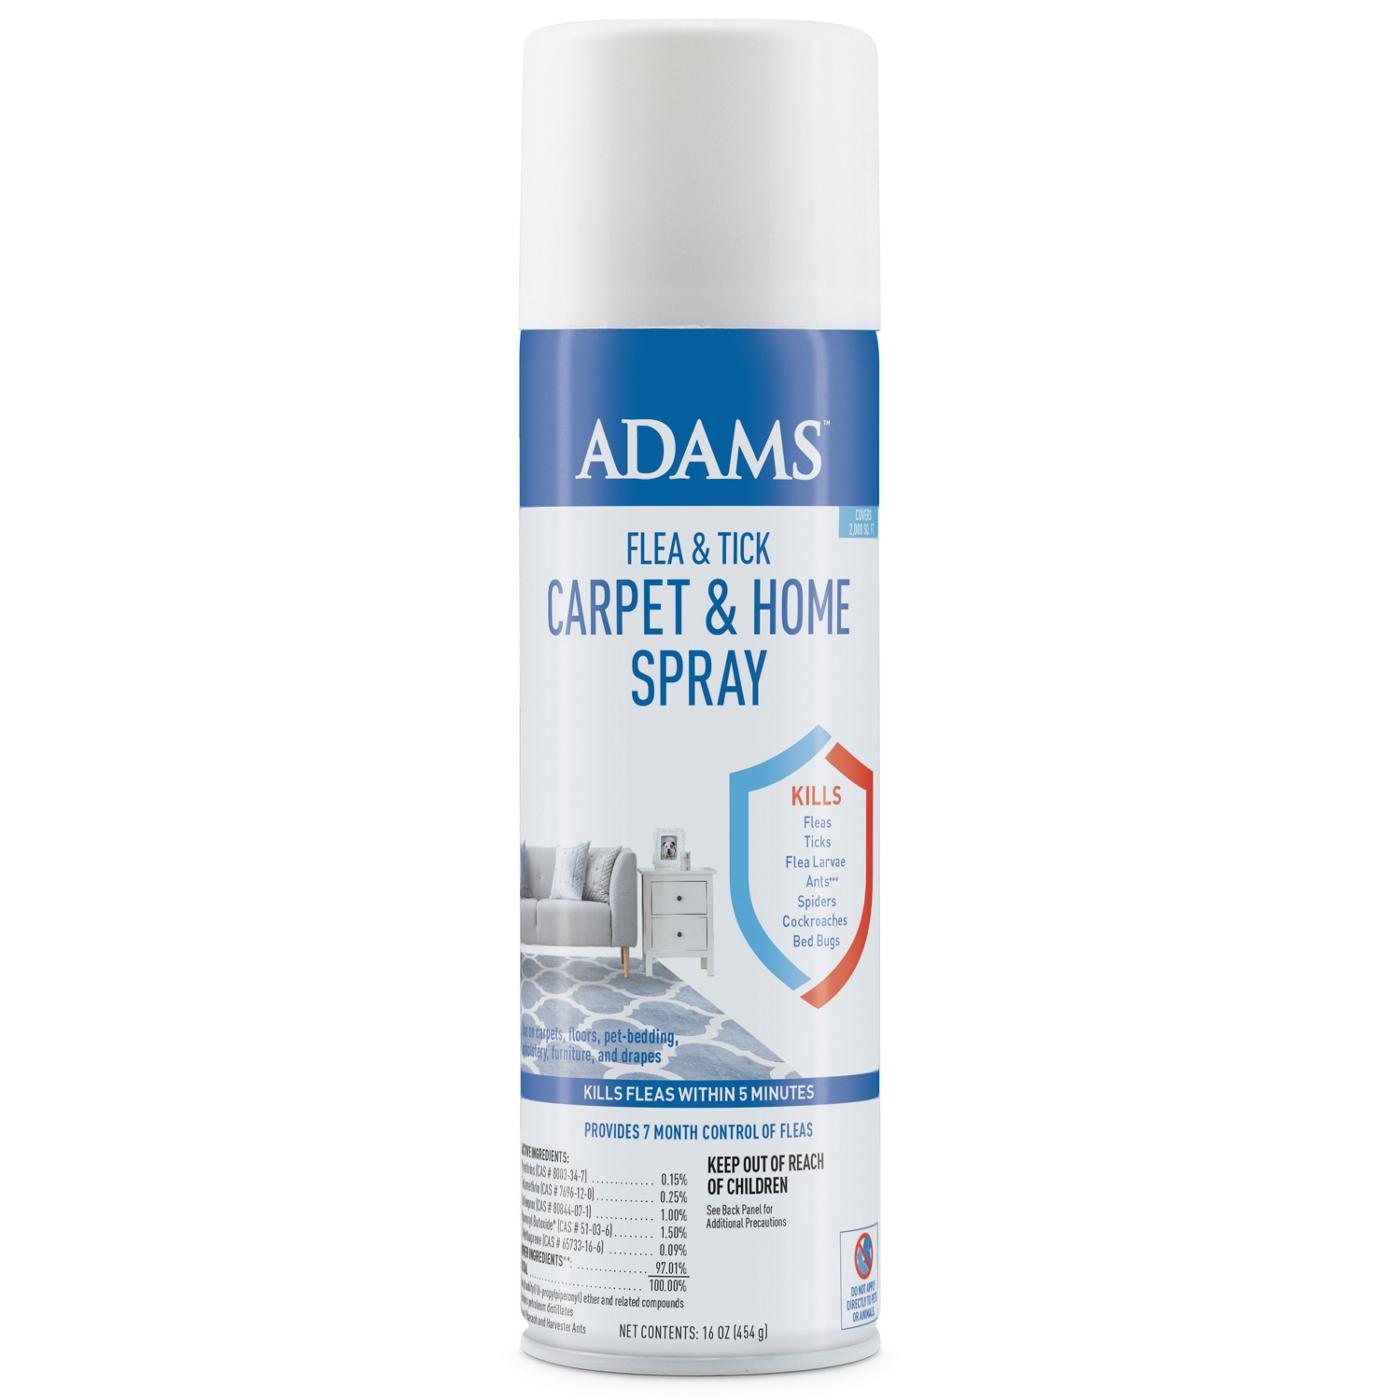 Adams Flea & Tick Carpet & Home Spray; image 1 of 2